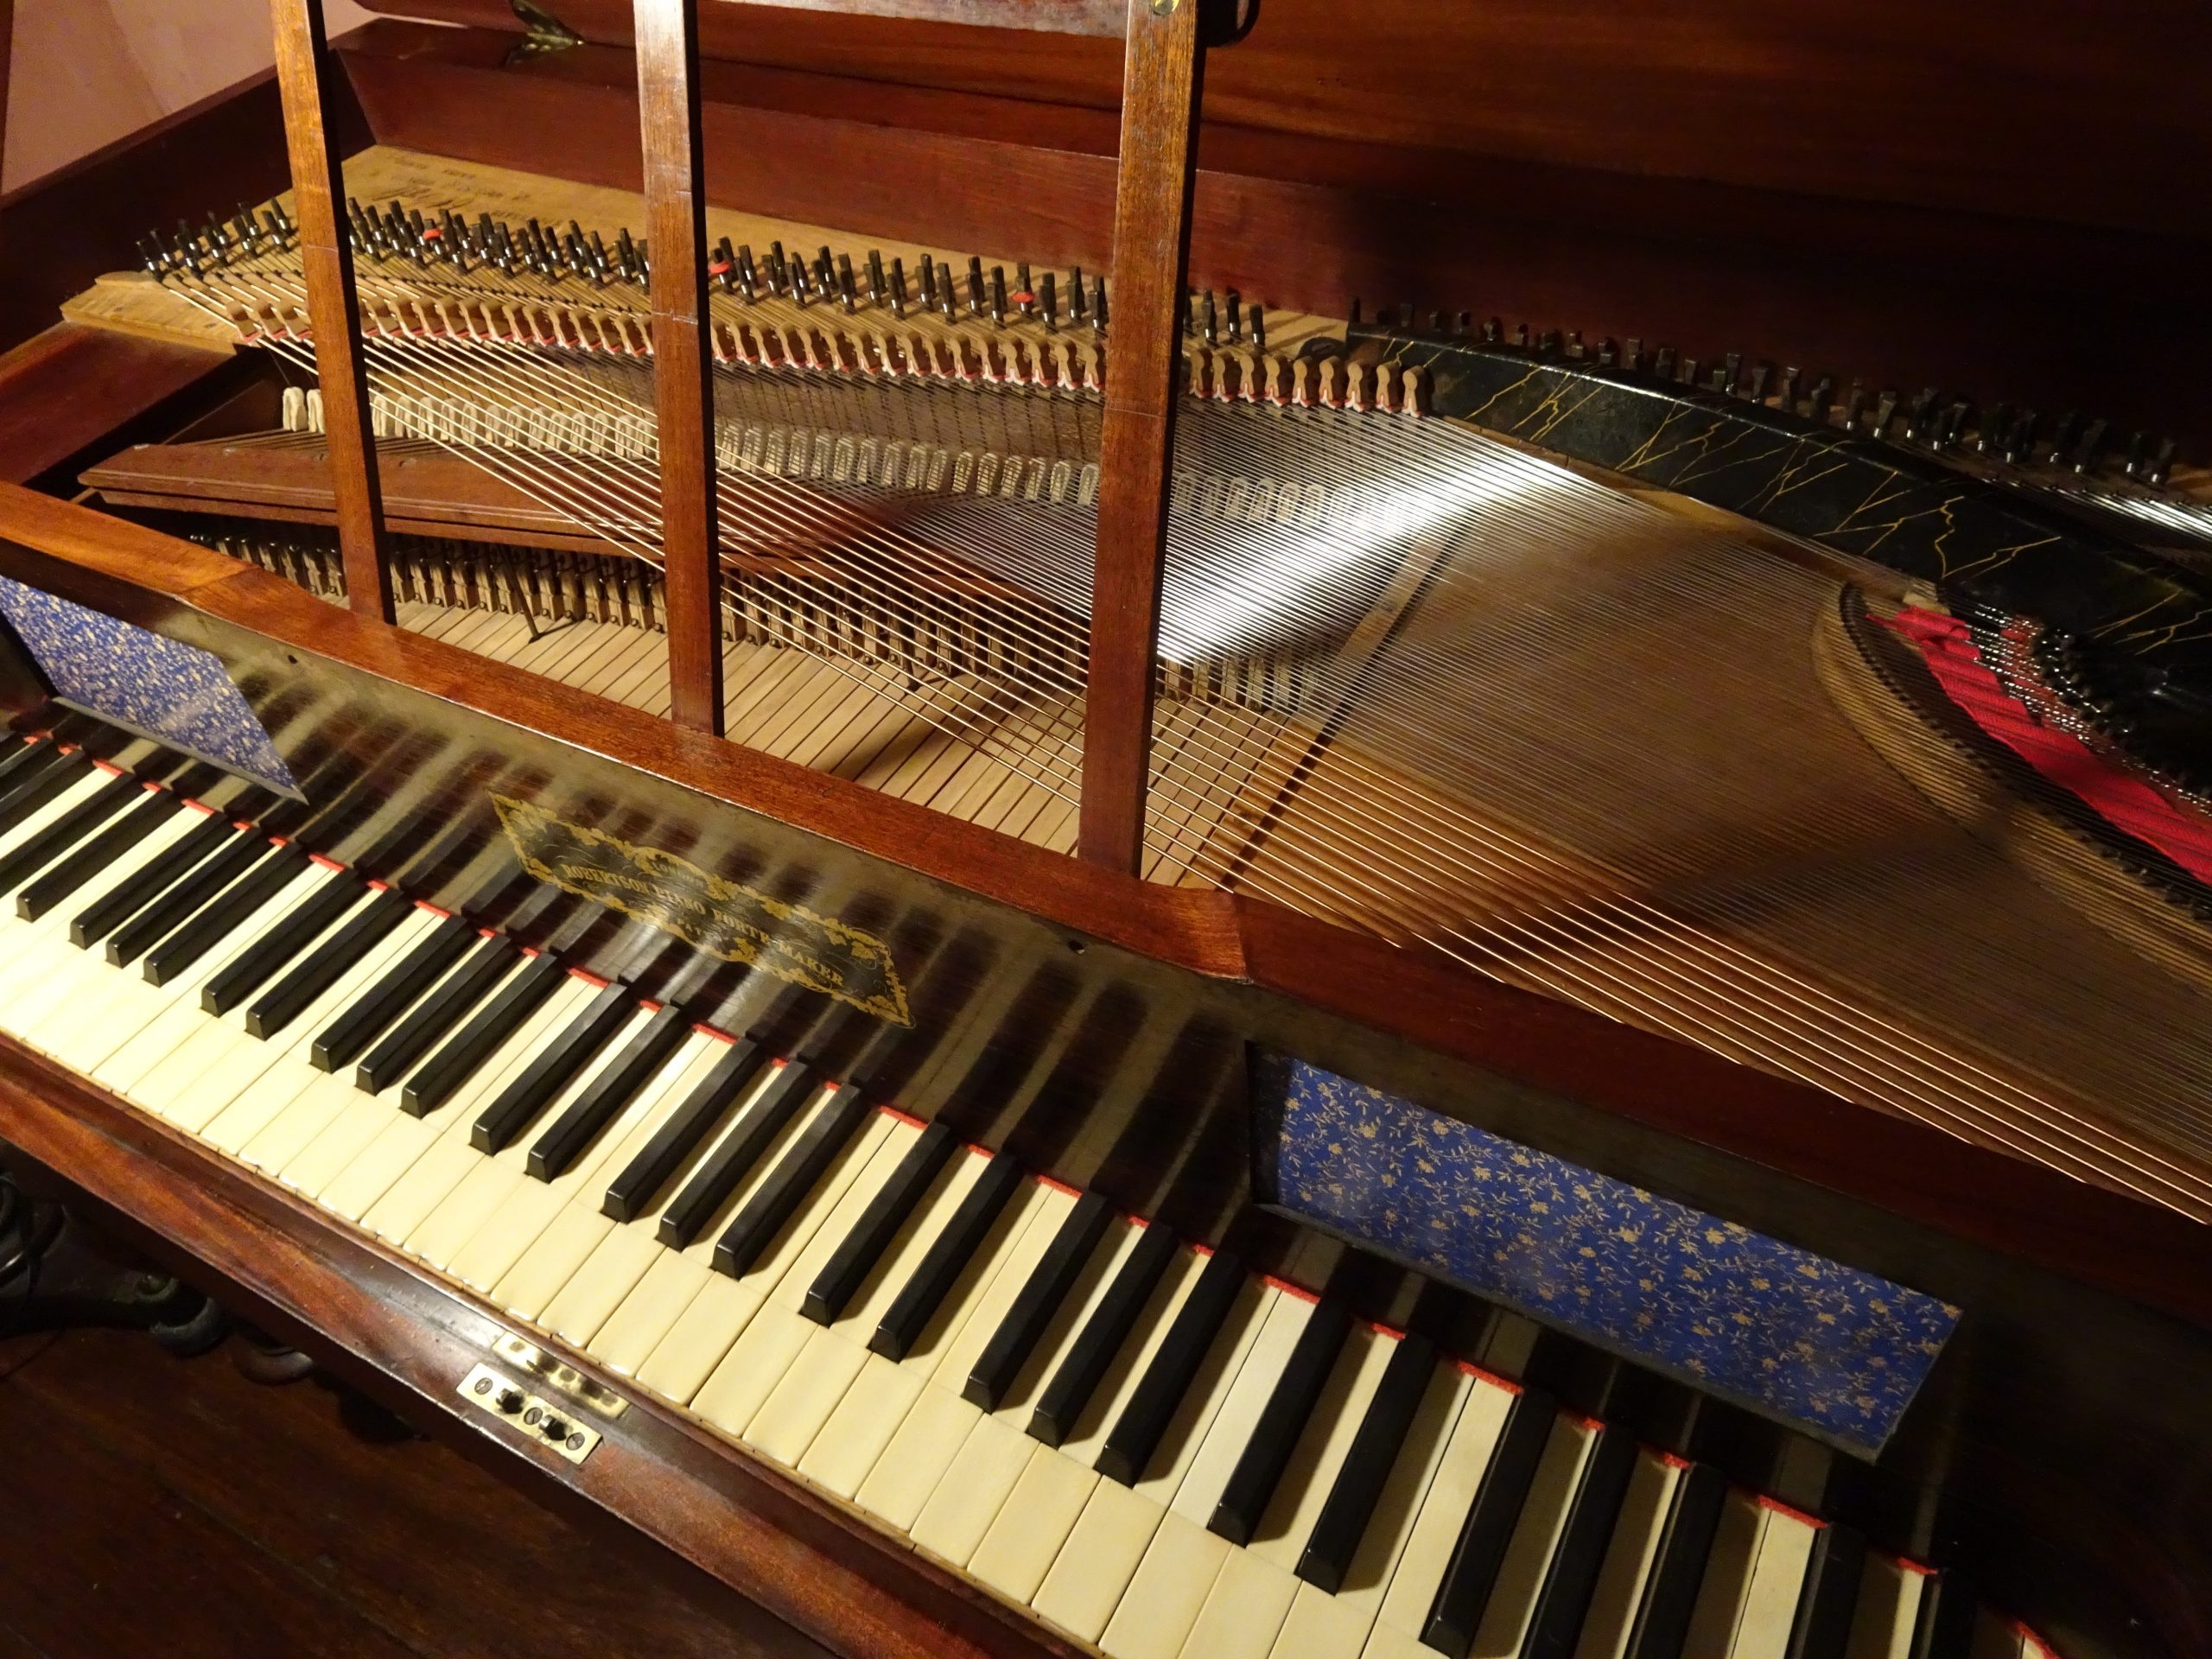 Fortepiano: The Square Piano, Horizontal Strings Arranged Diagonally Across The Rectangular Case. 2560x1920 HD Wallpaper.